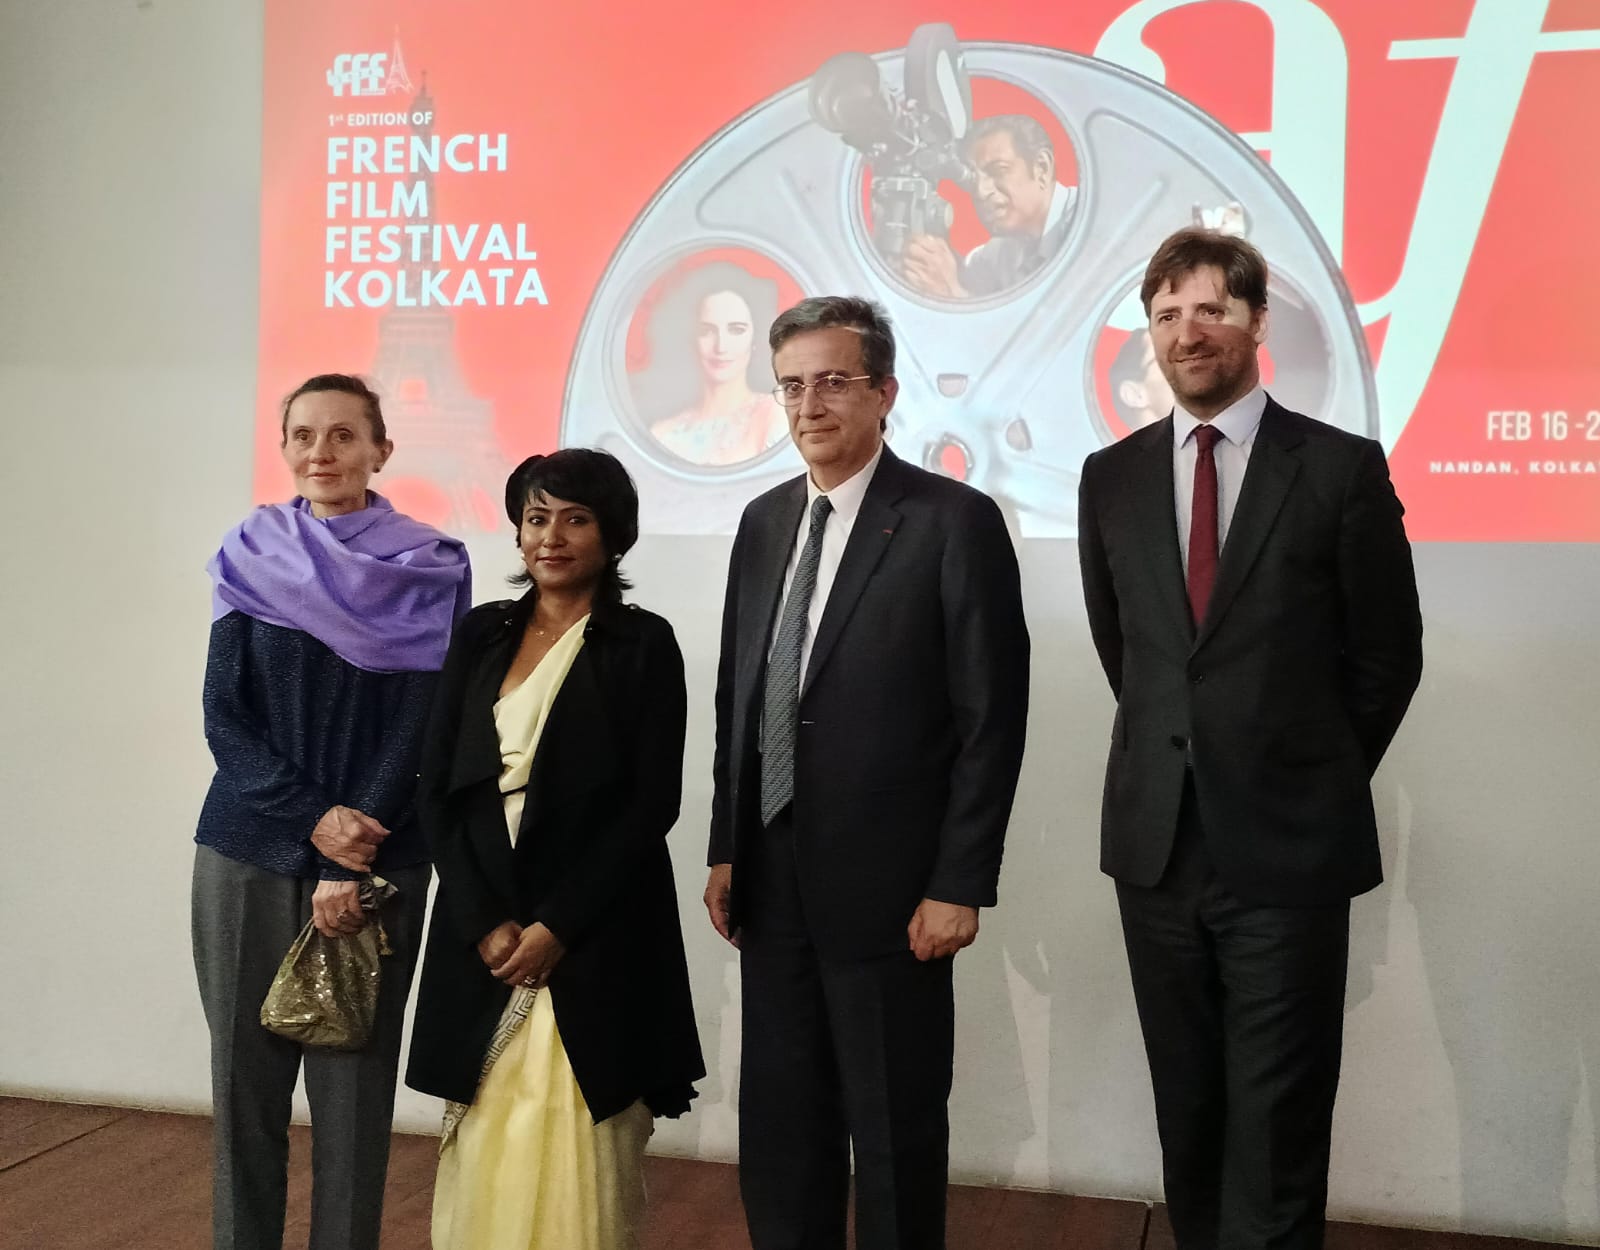 french film festival